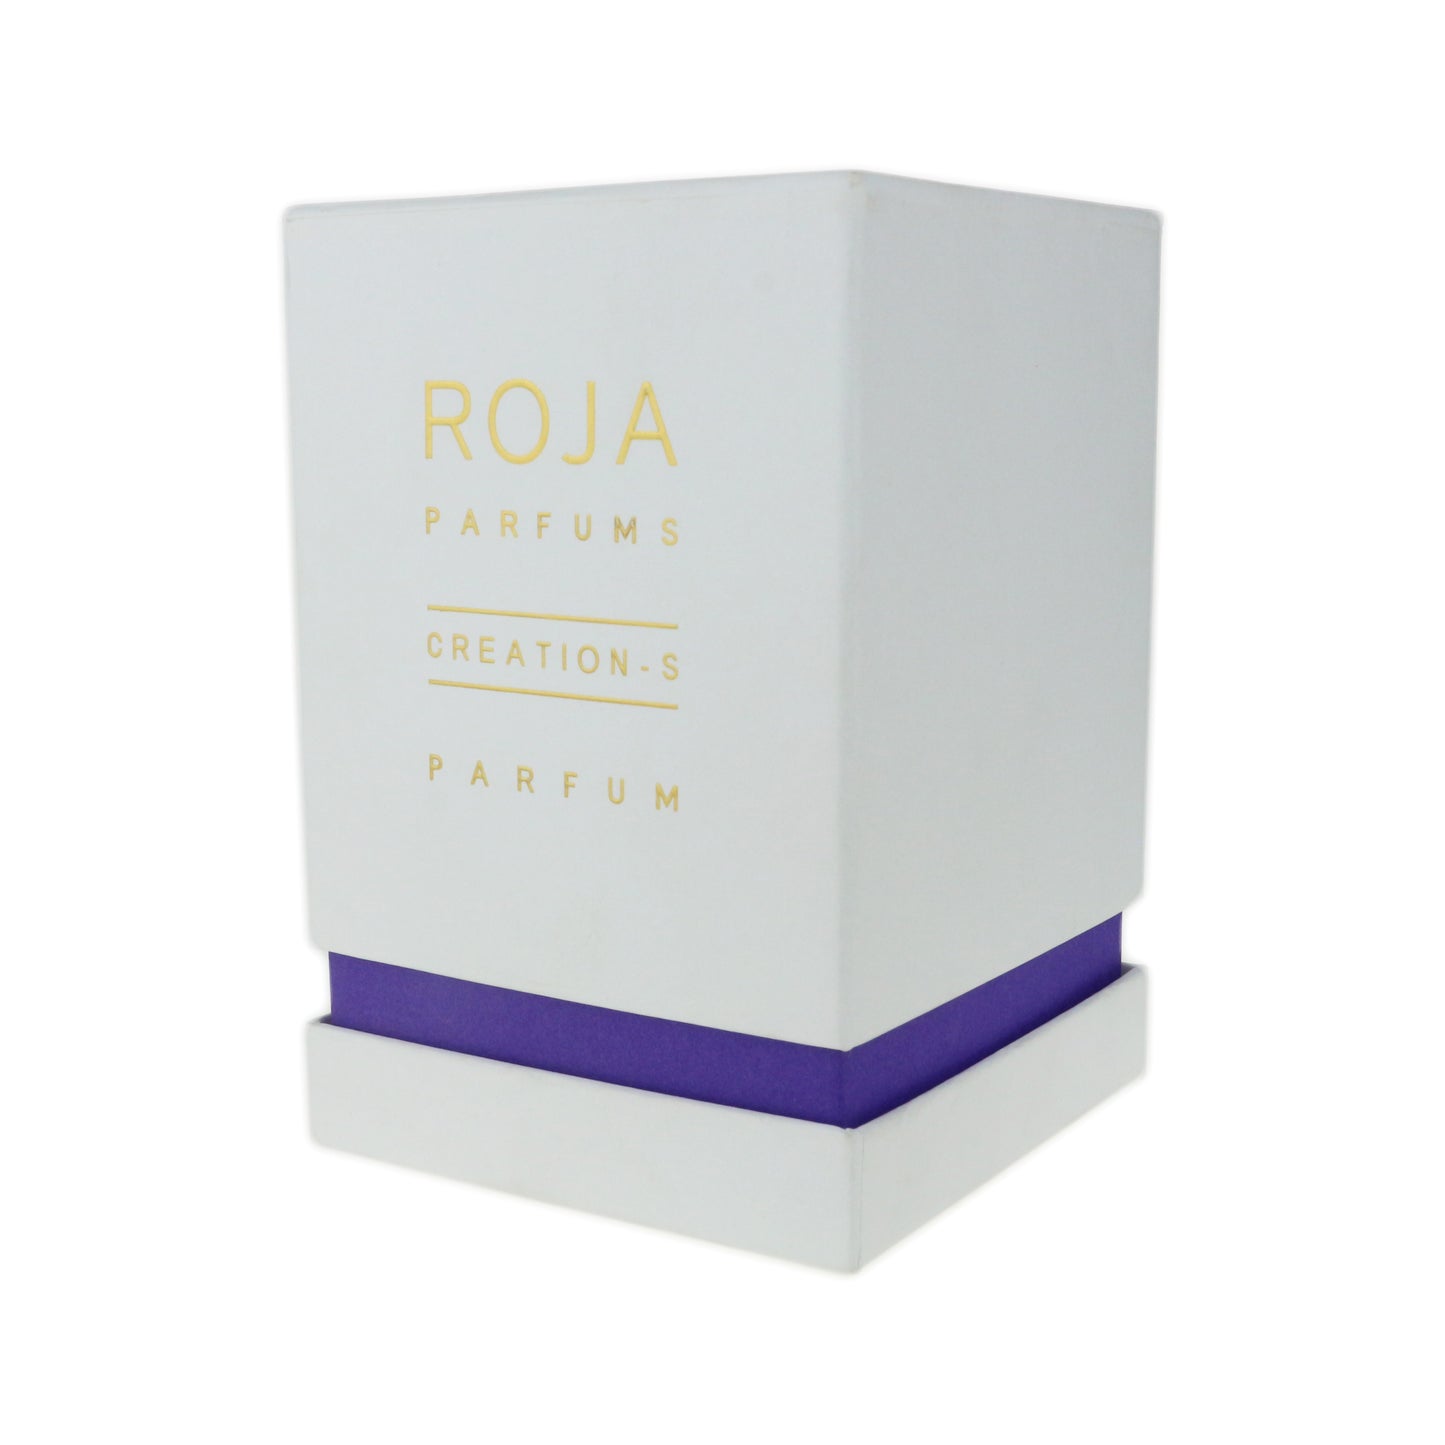 Roja Dove 'Creation-S ' Parfum 1.7oz New In Box 'Paper label,No Cellophane'